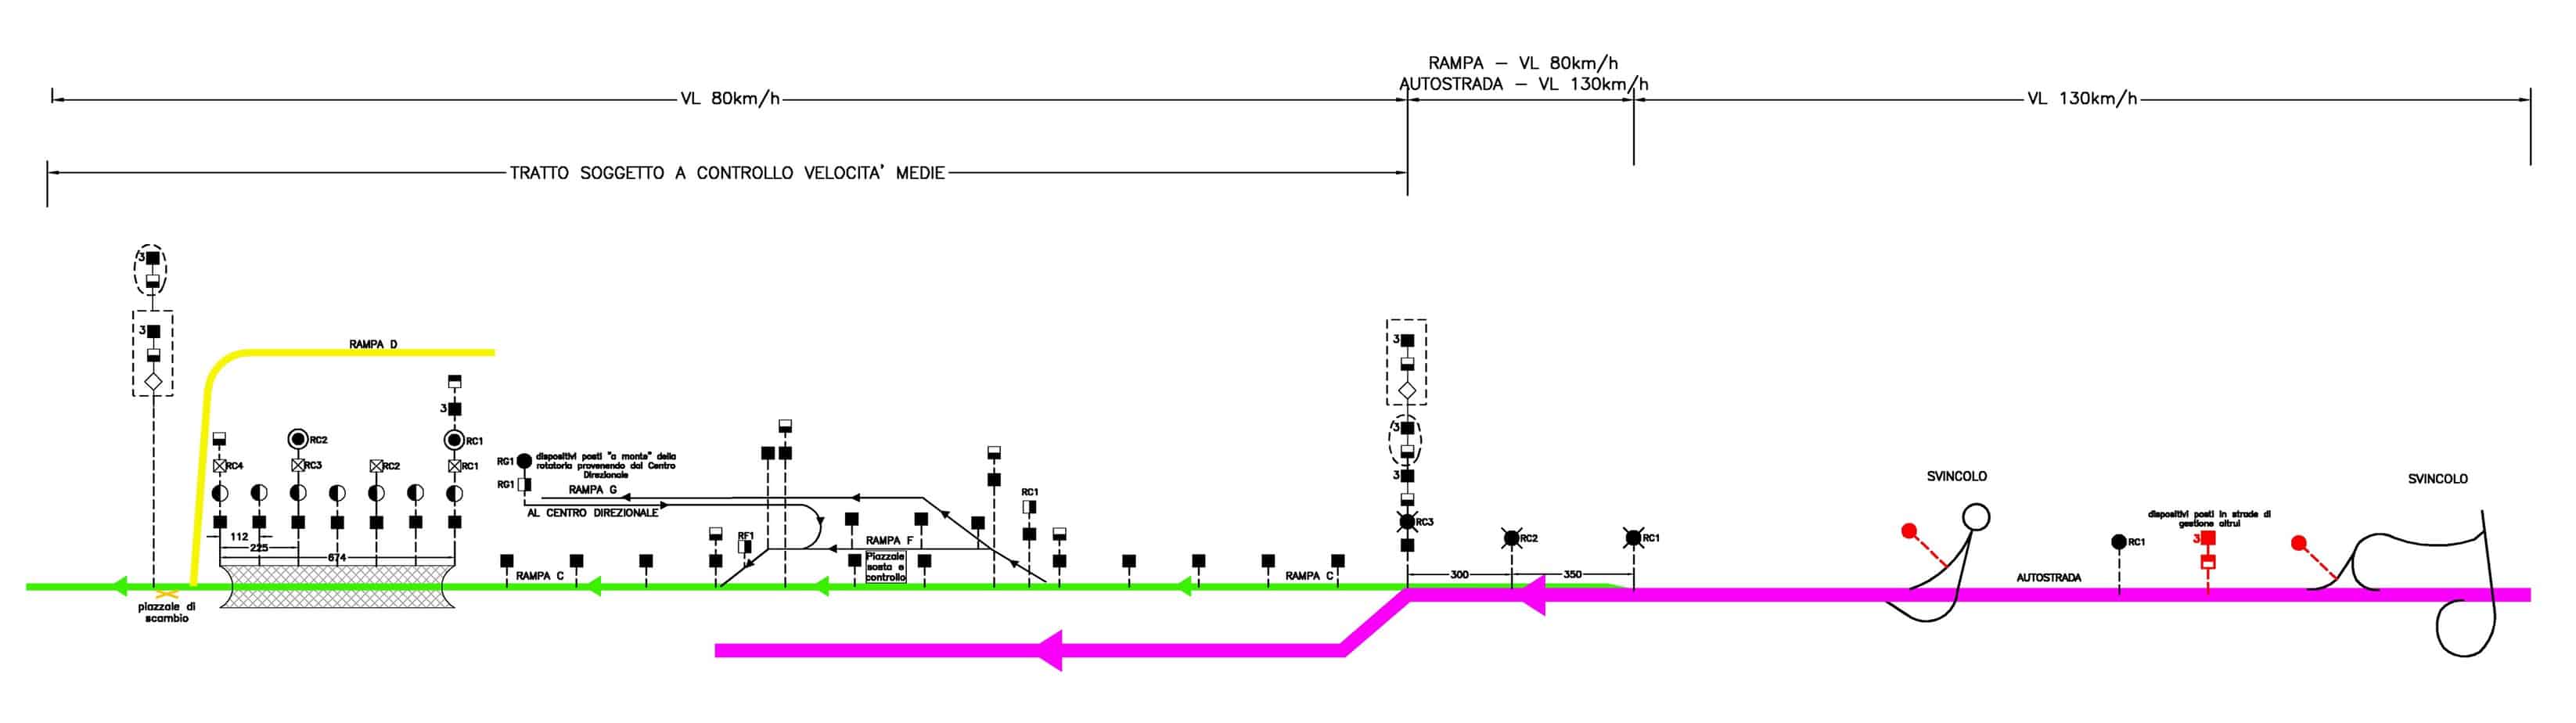 Il layout schematico del “traffic management system”